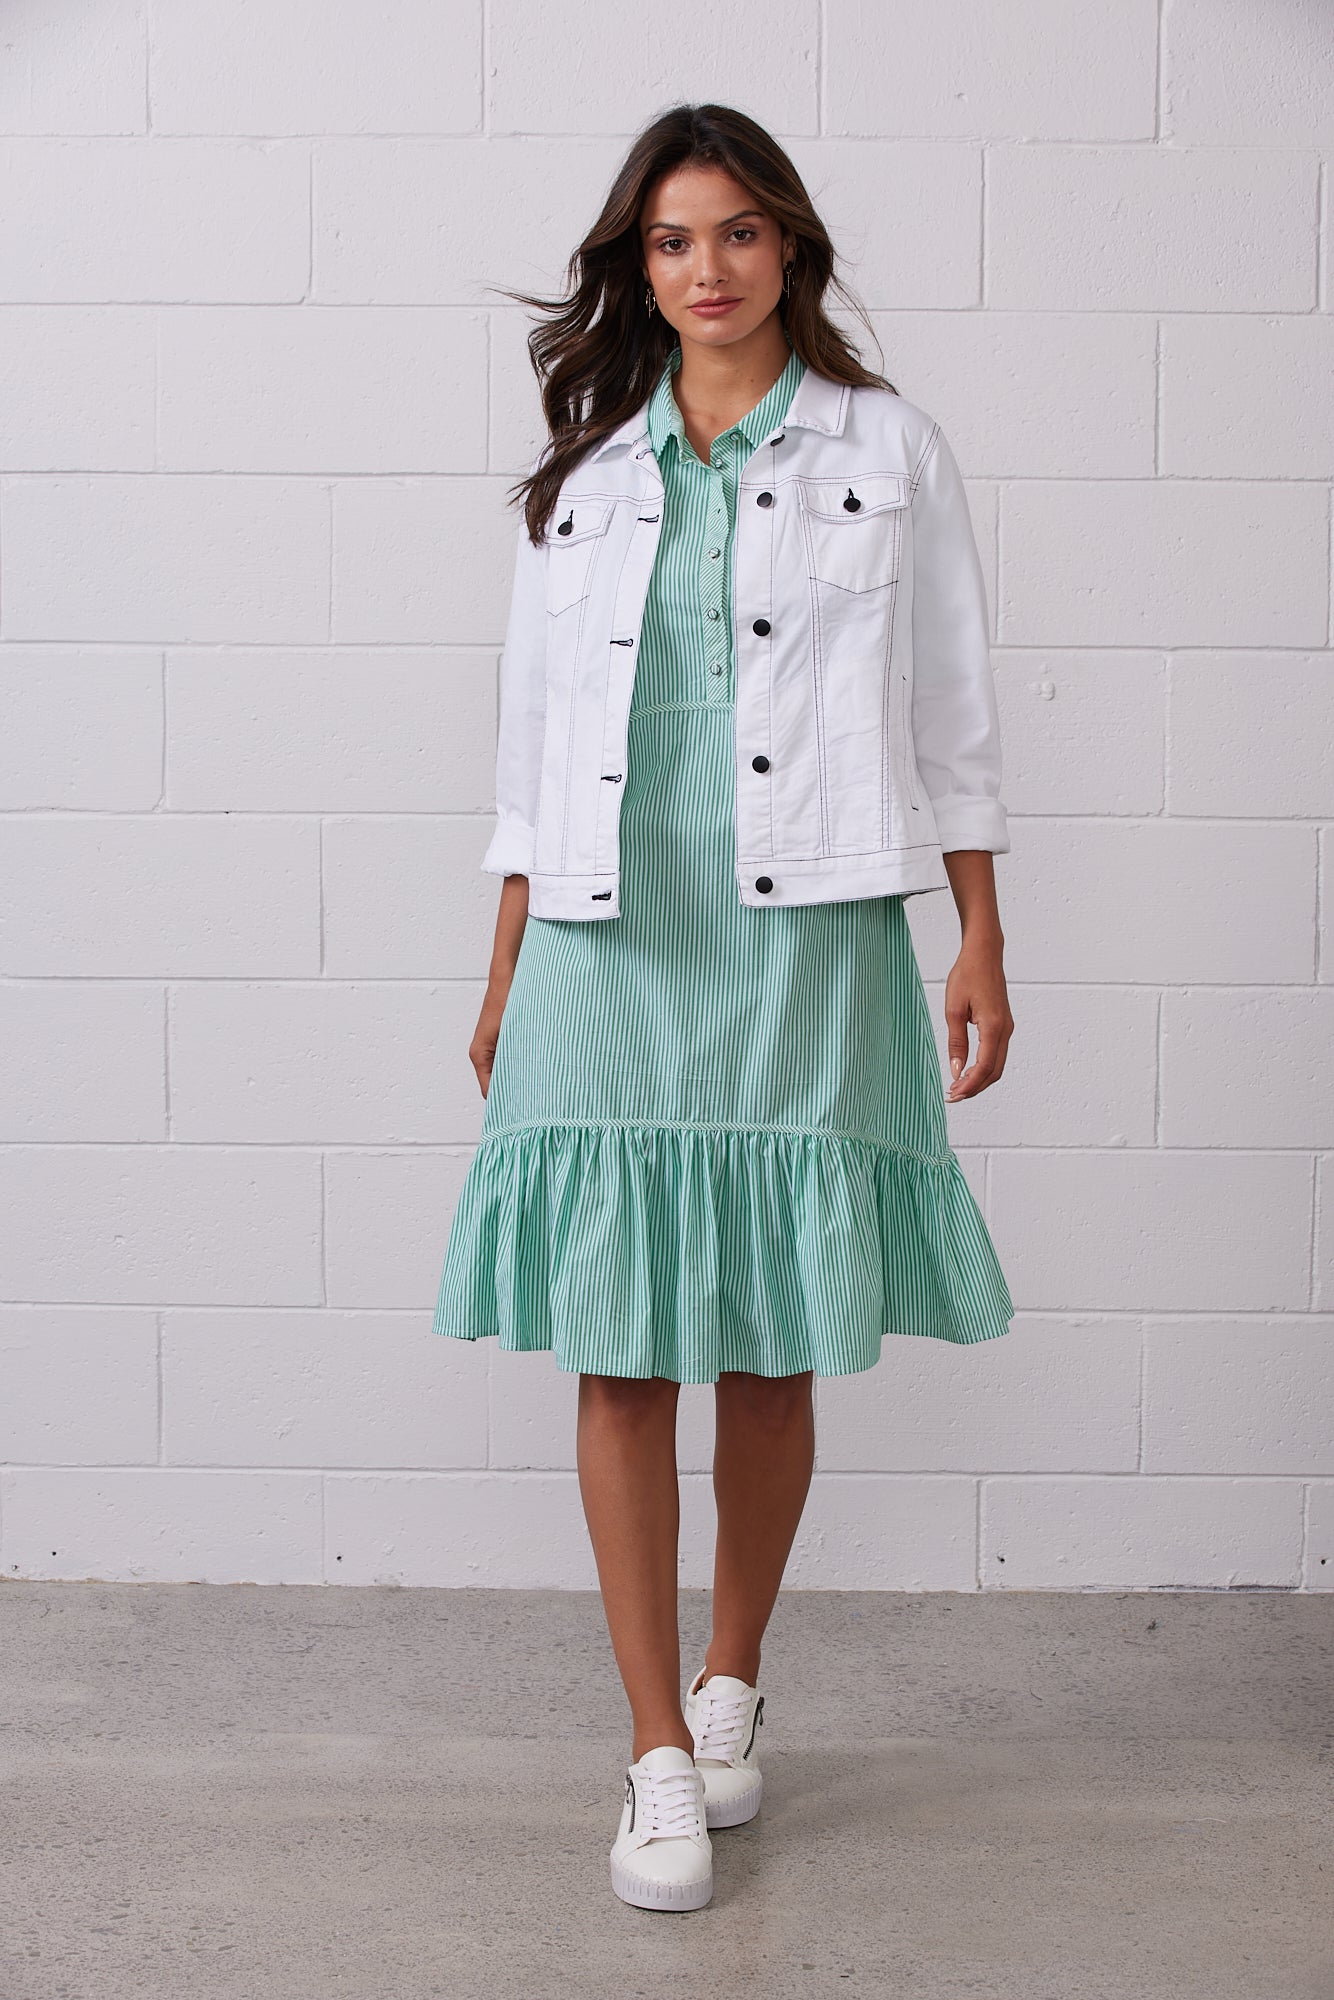 Newport - NP27726 - Lori Cotton Dress - Green Stripe - 50% Off 1 x 10 left